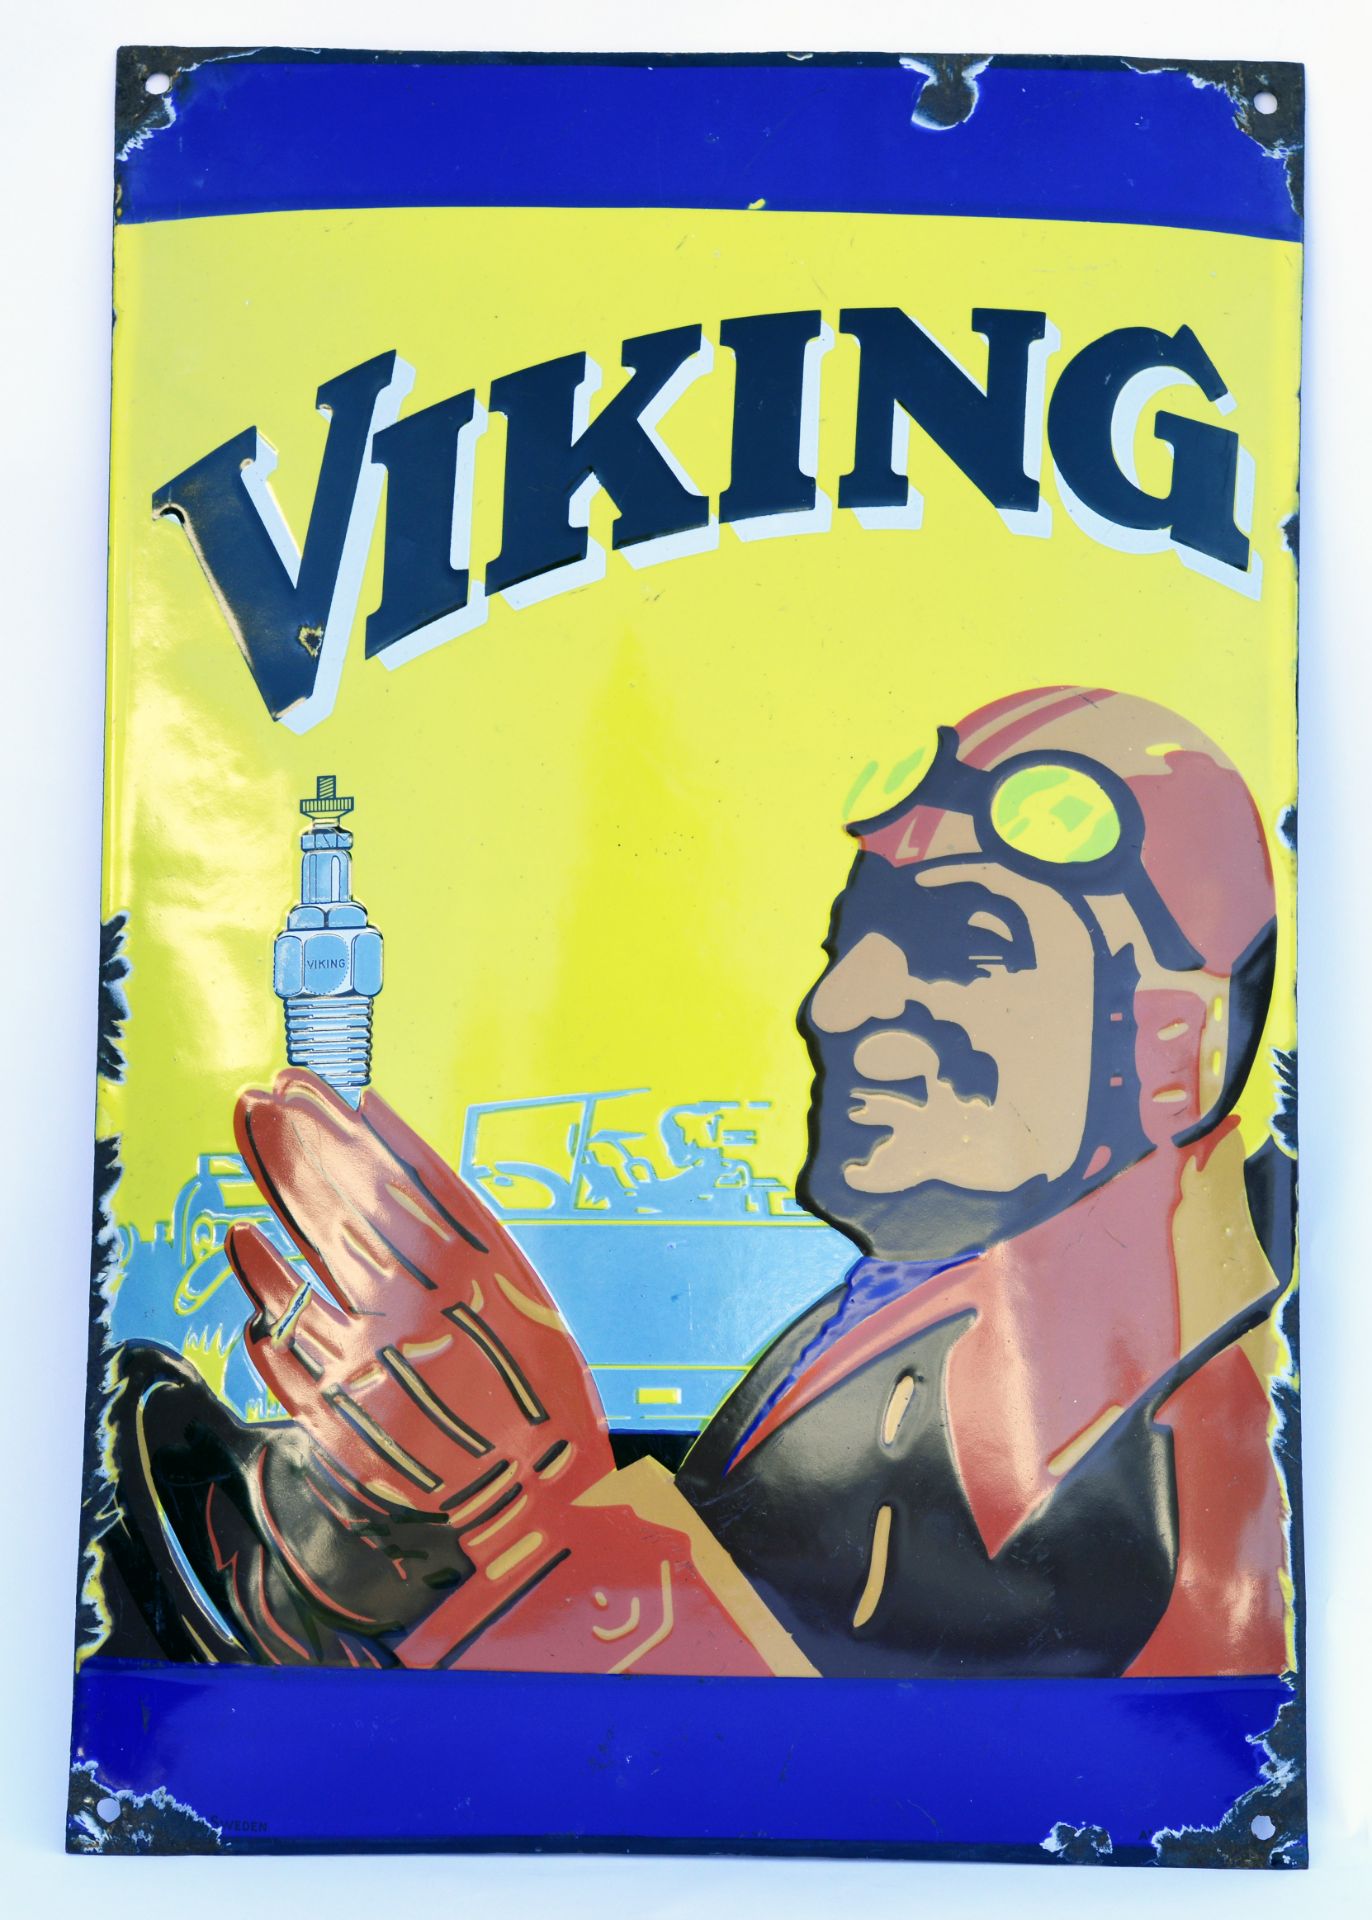 Viking, enamel sign, 39 x 59 cm, damages on the edges, please inspect